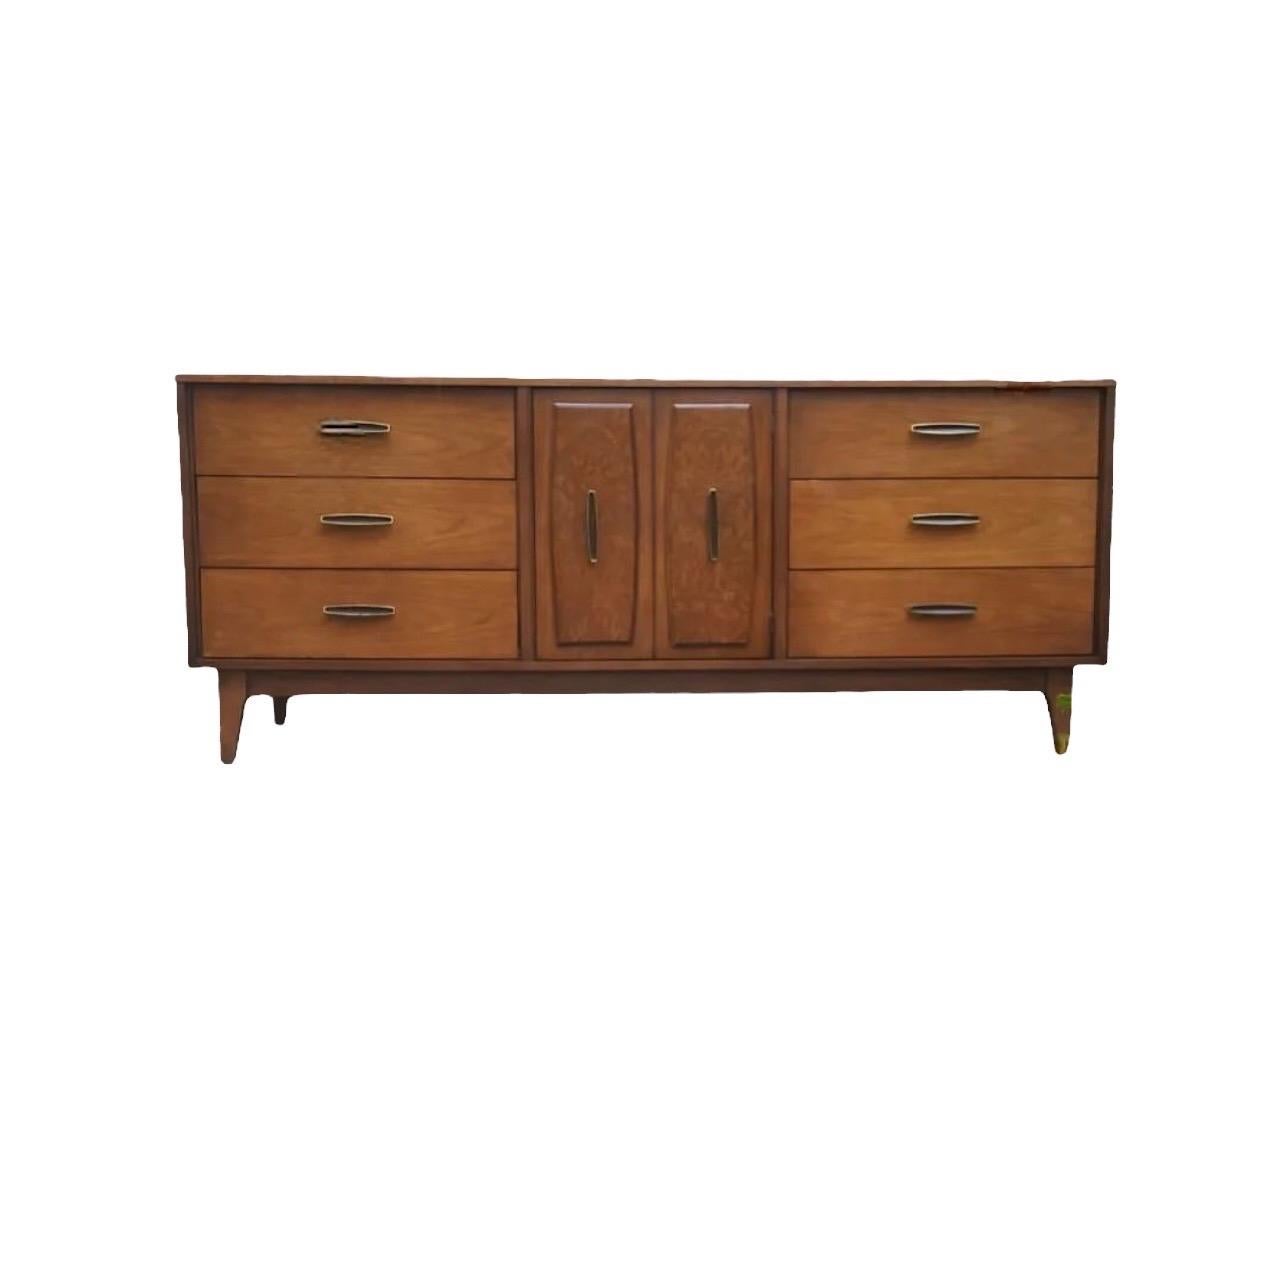 Vintage Mid-Century Modern 9 drawer dresser burl wood dresser cabinet storage
Dimensions. 72 W ; 30 H ; 19 D.